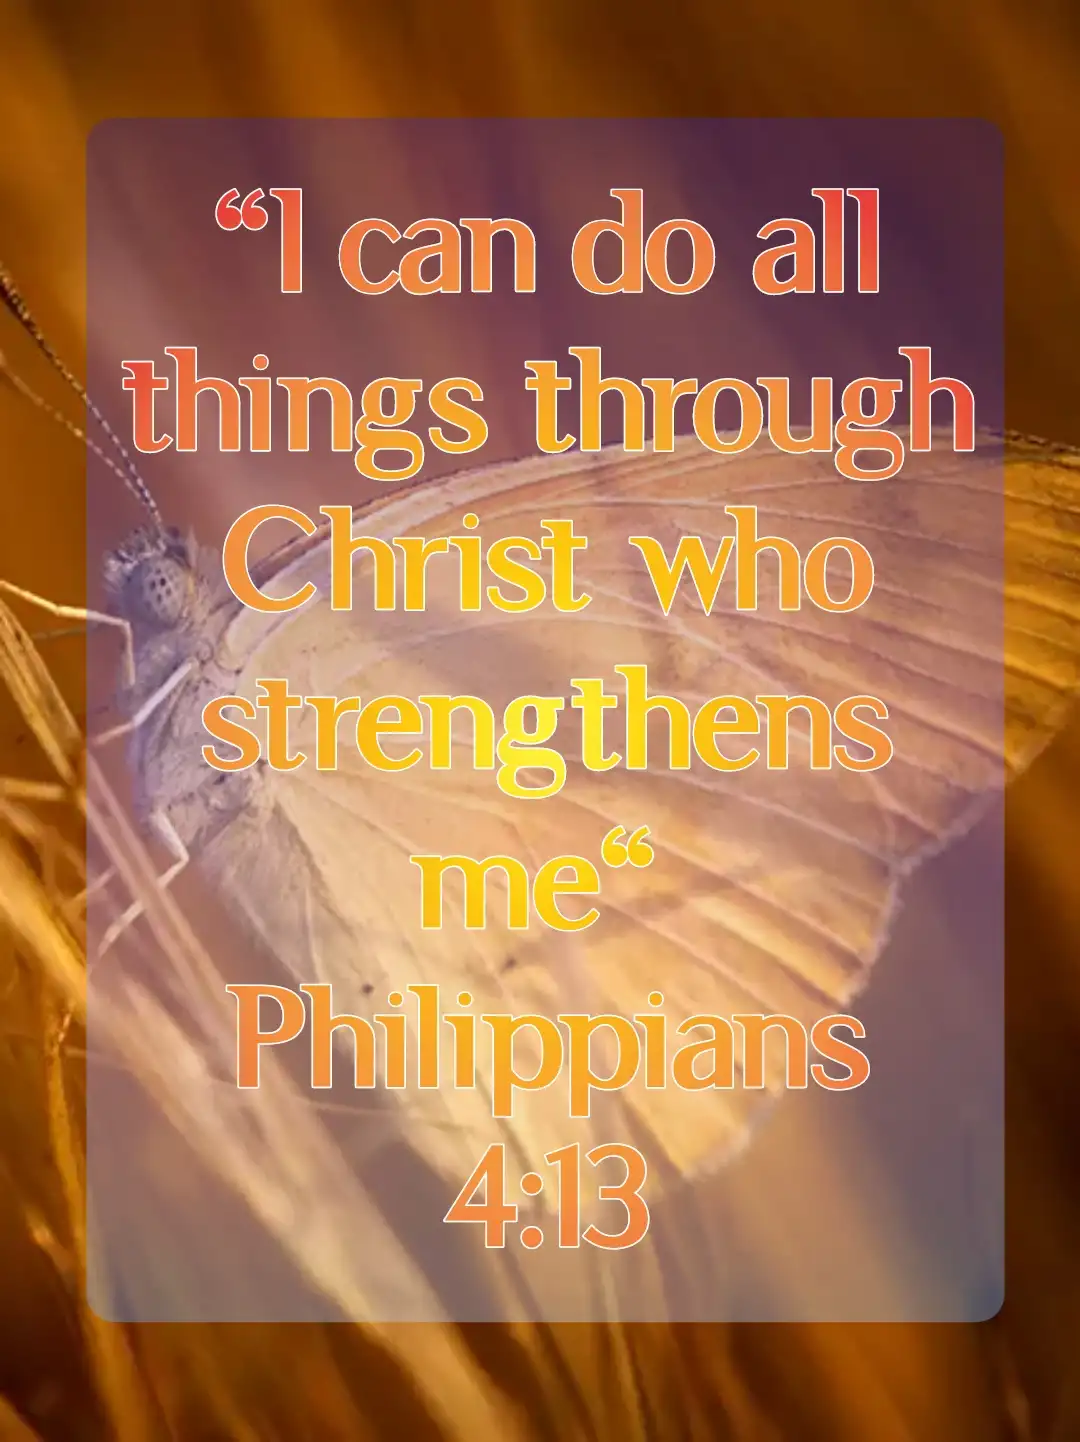 Short Bible Verses For Facebook, Instagram, Whatsapp (Philippians 4:13)